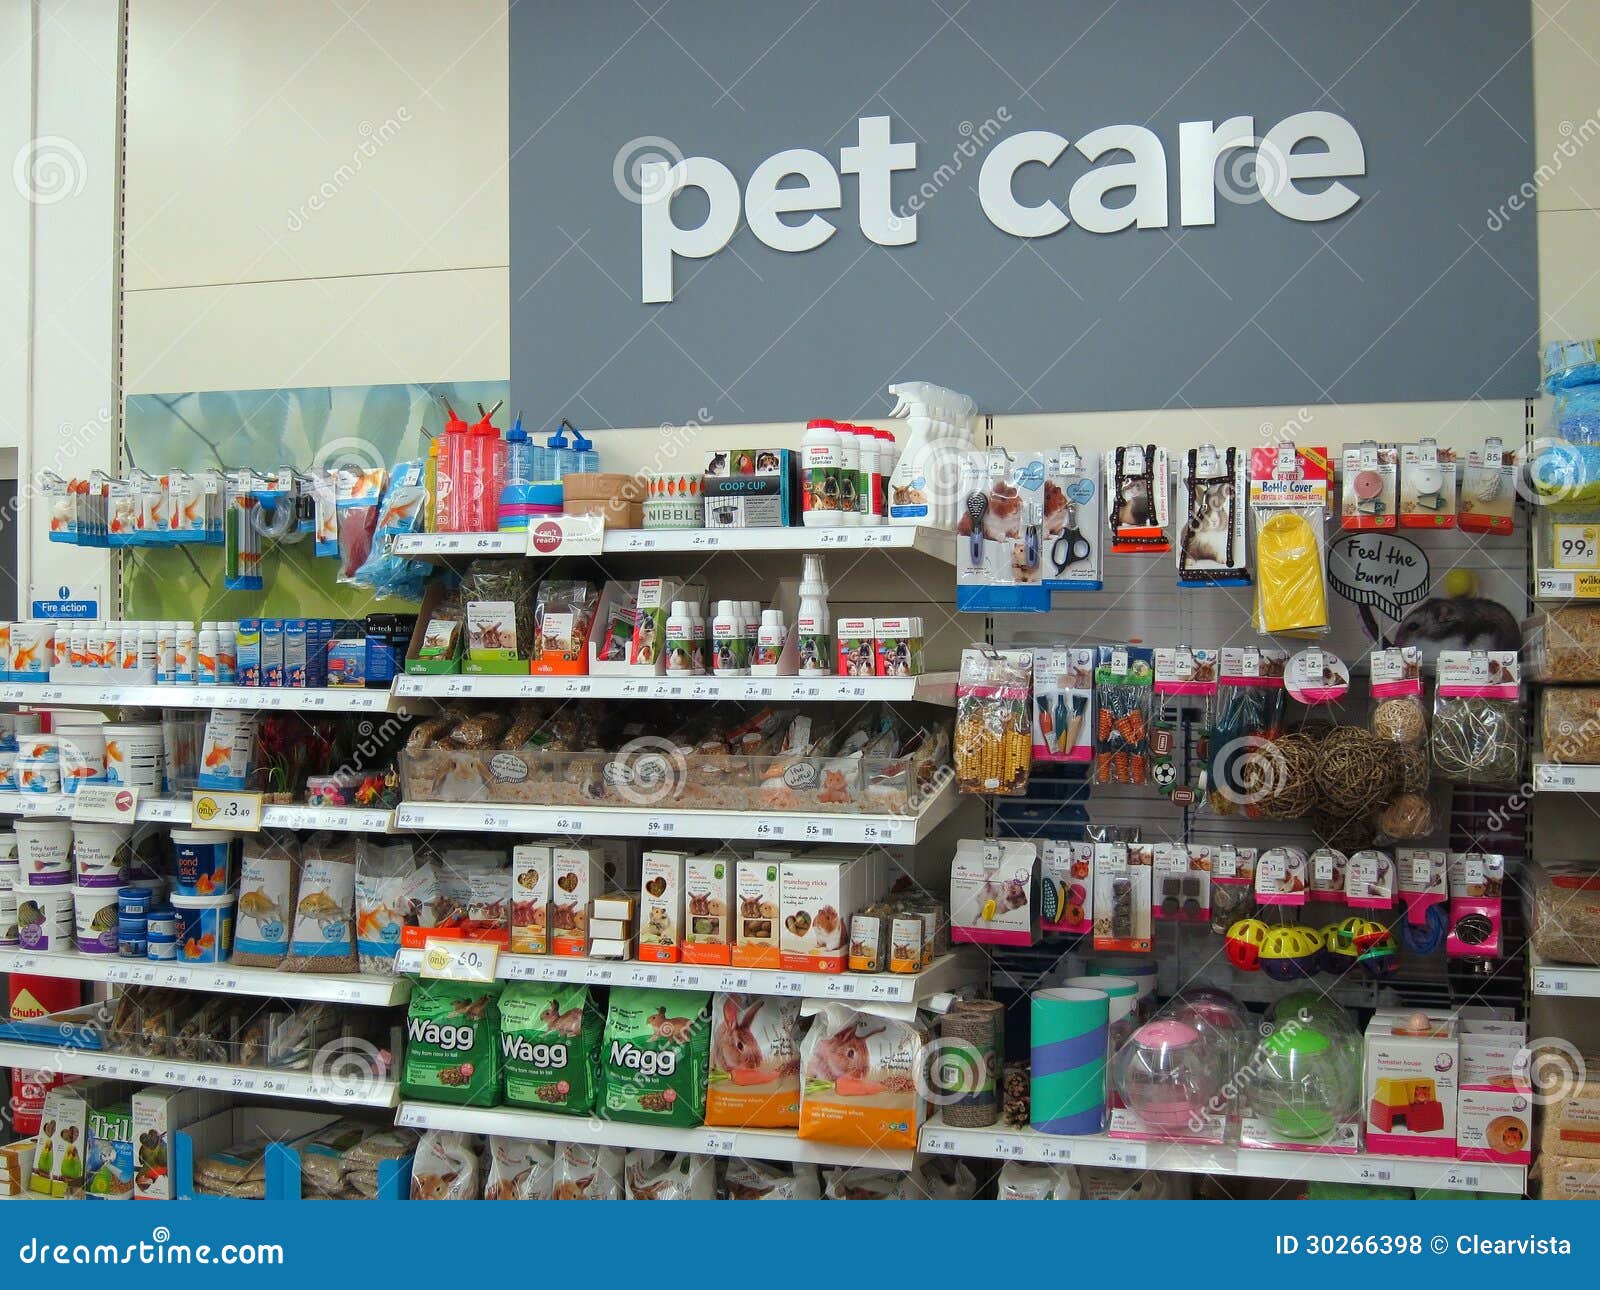 pet-care-products-editorial-image-cartoondealer-47572306